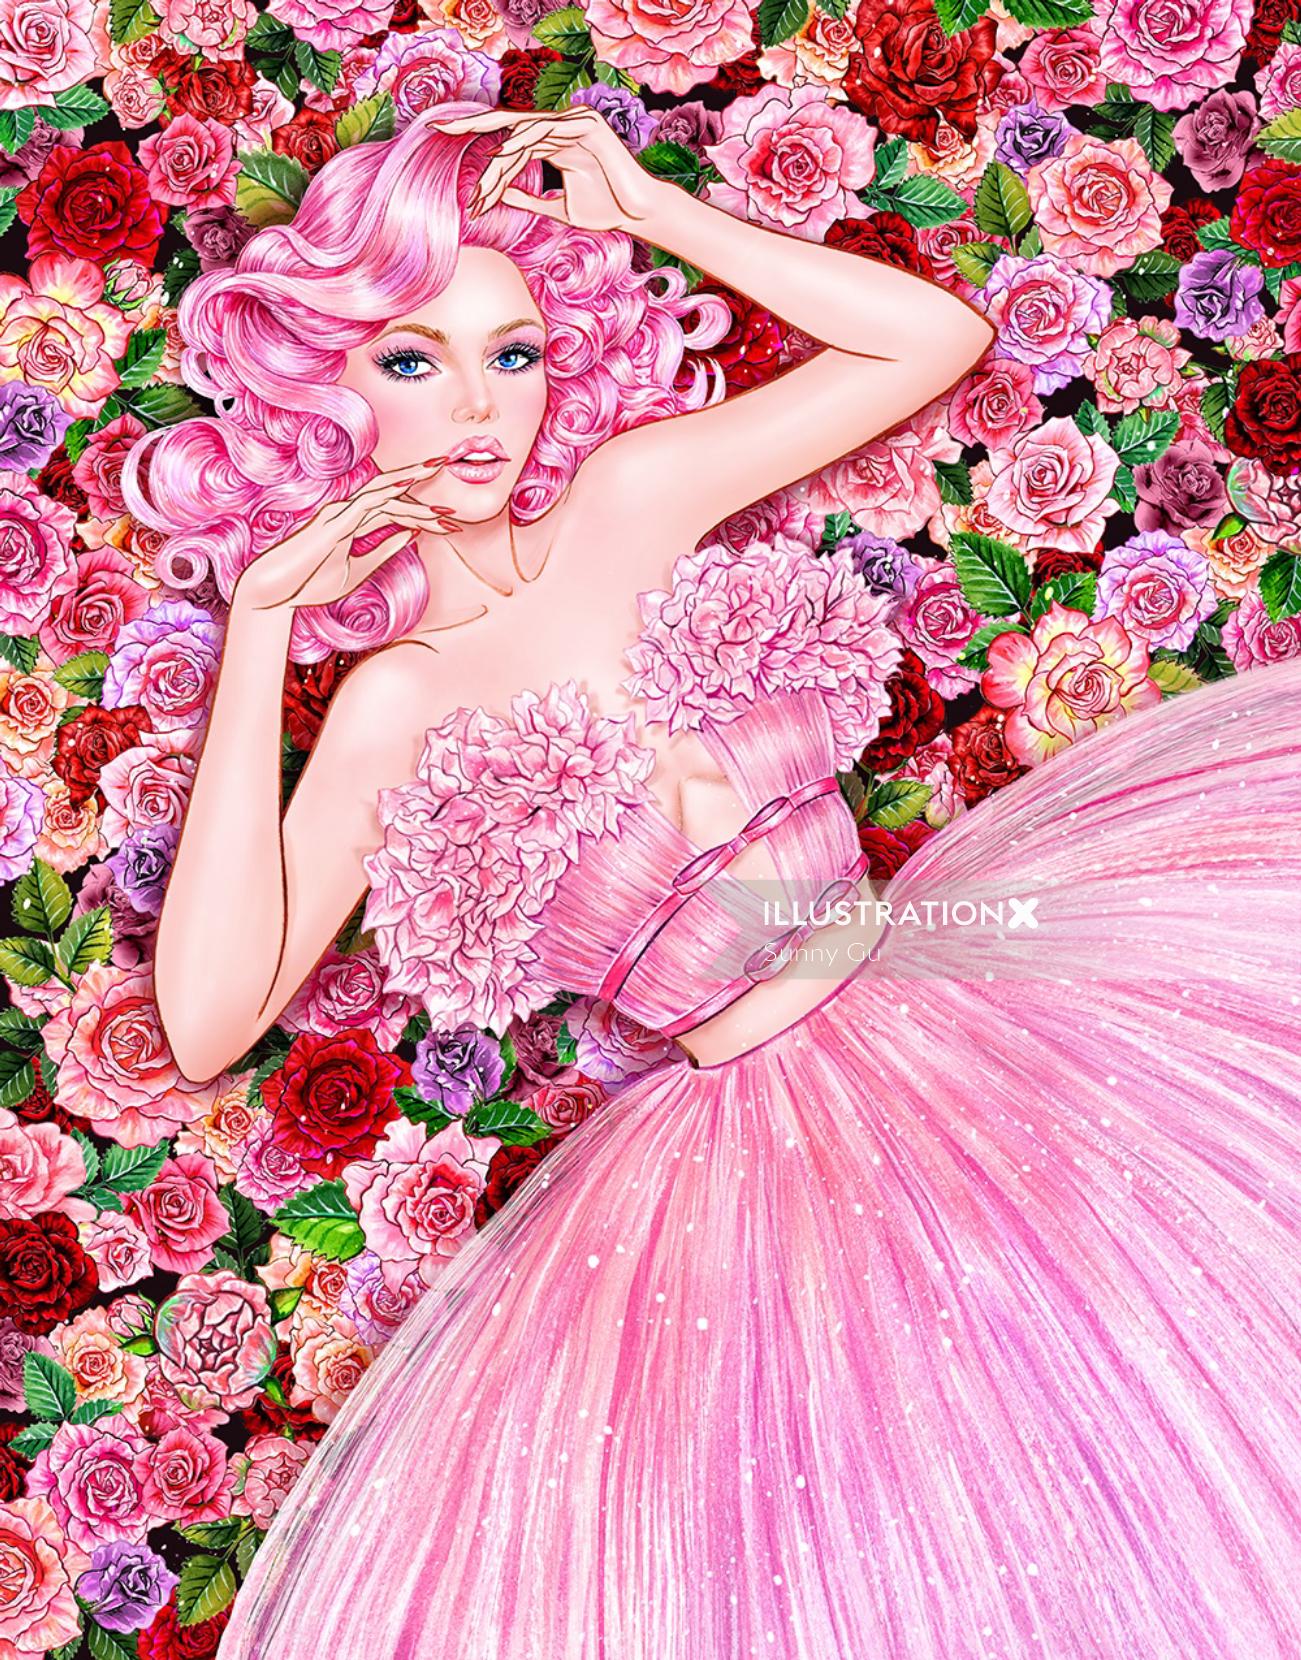 Illustration aquarelle de jeune fille en robe rose